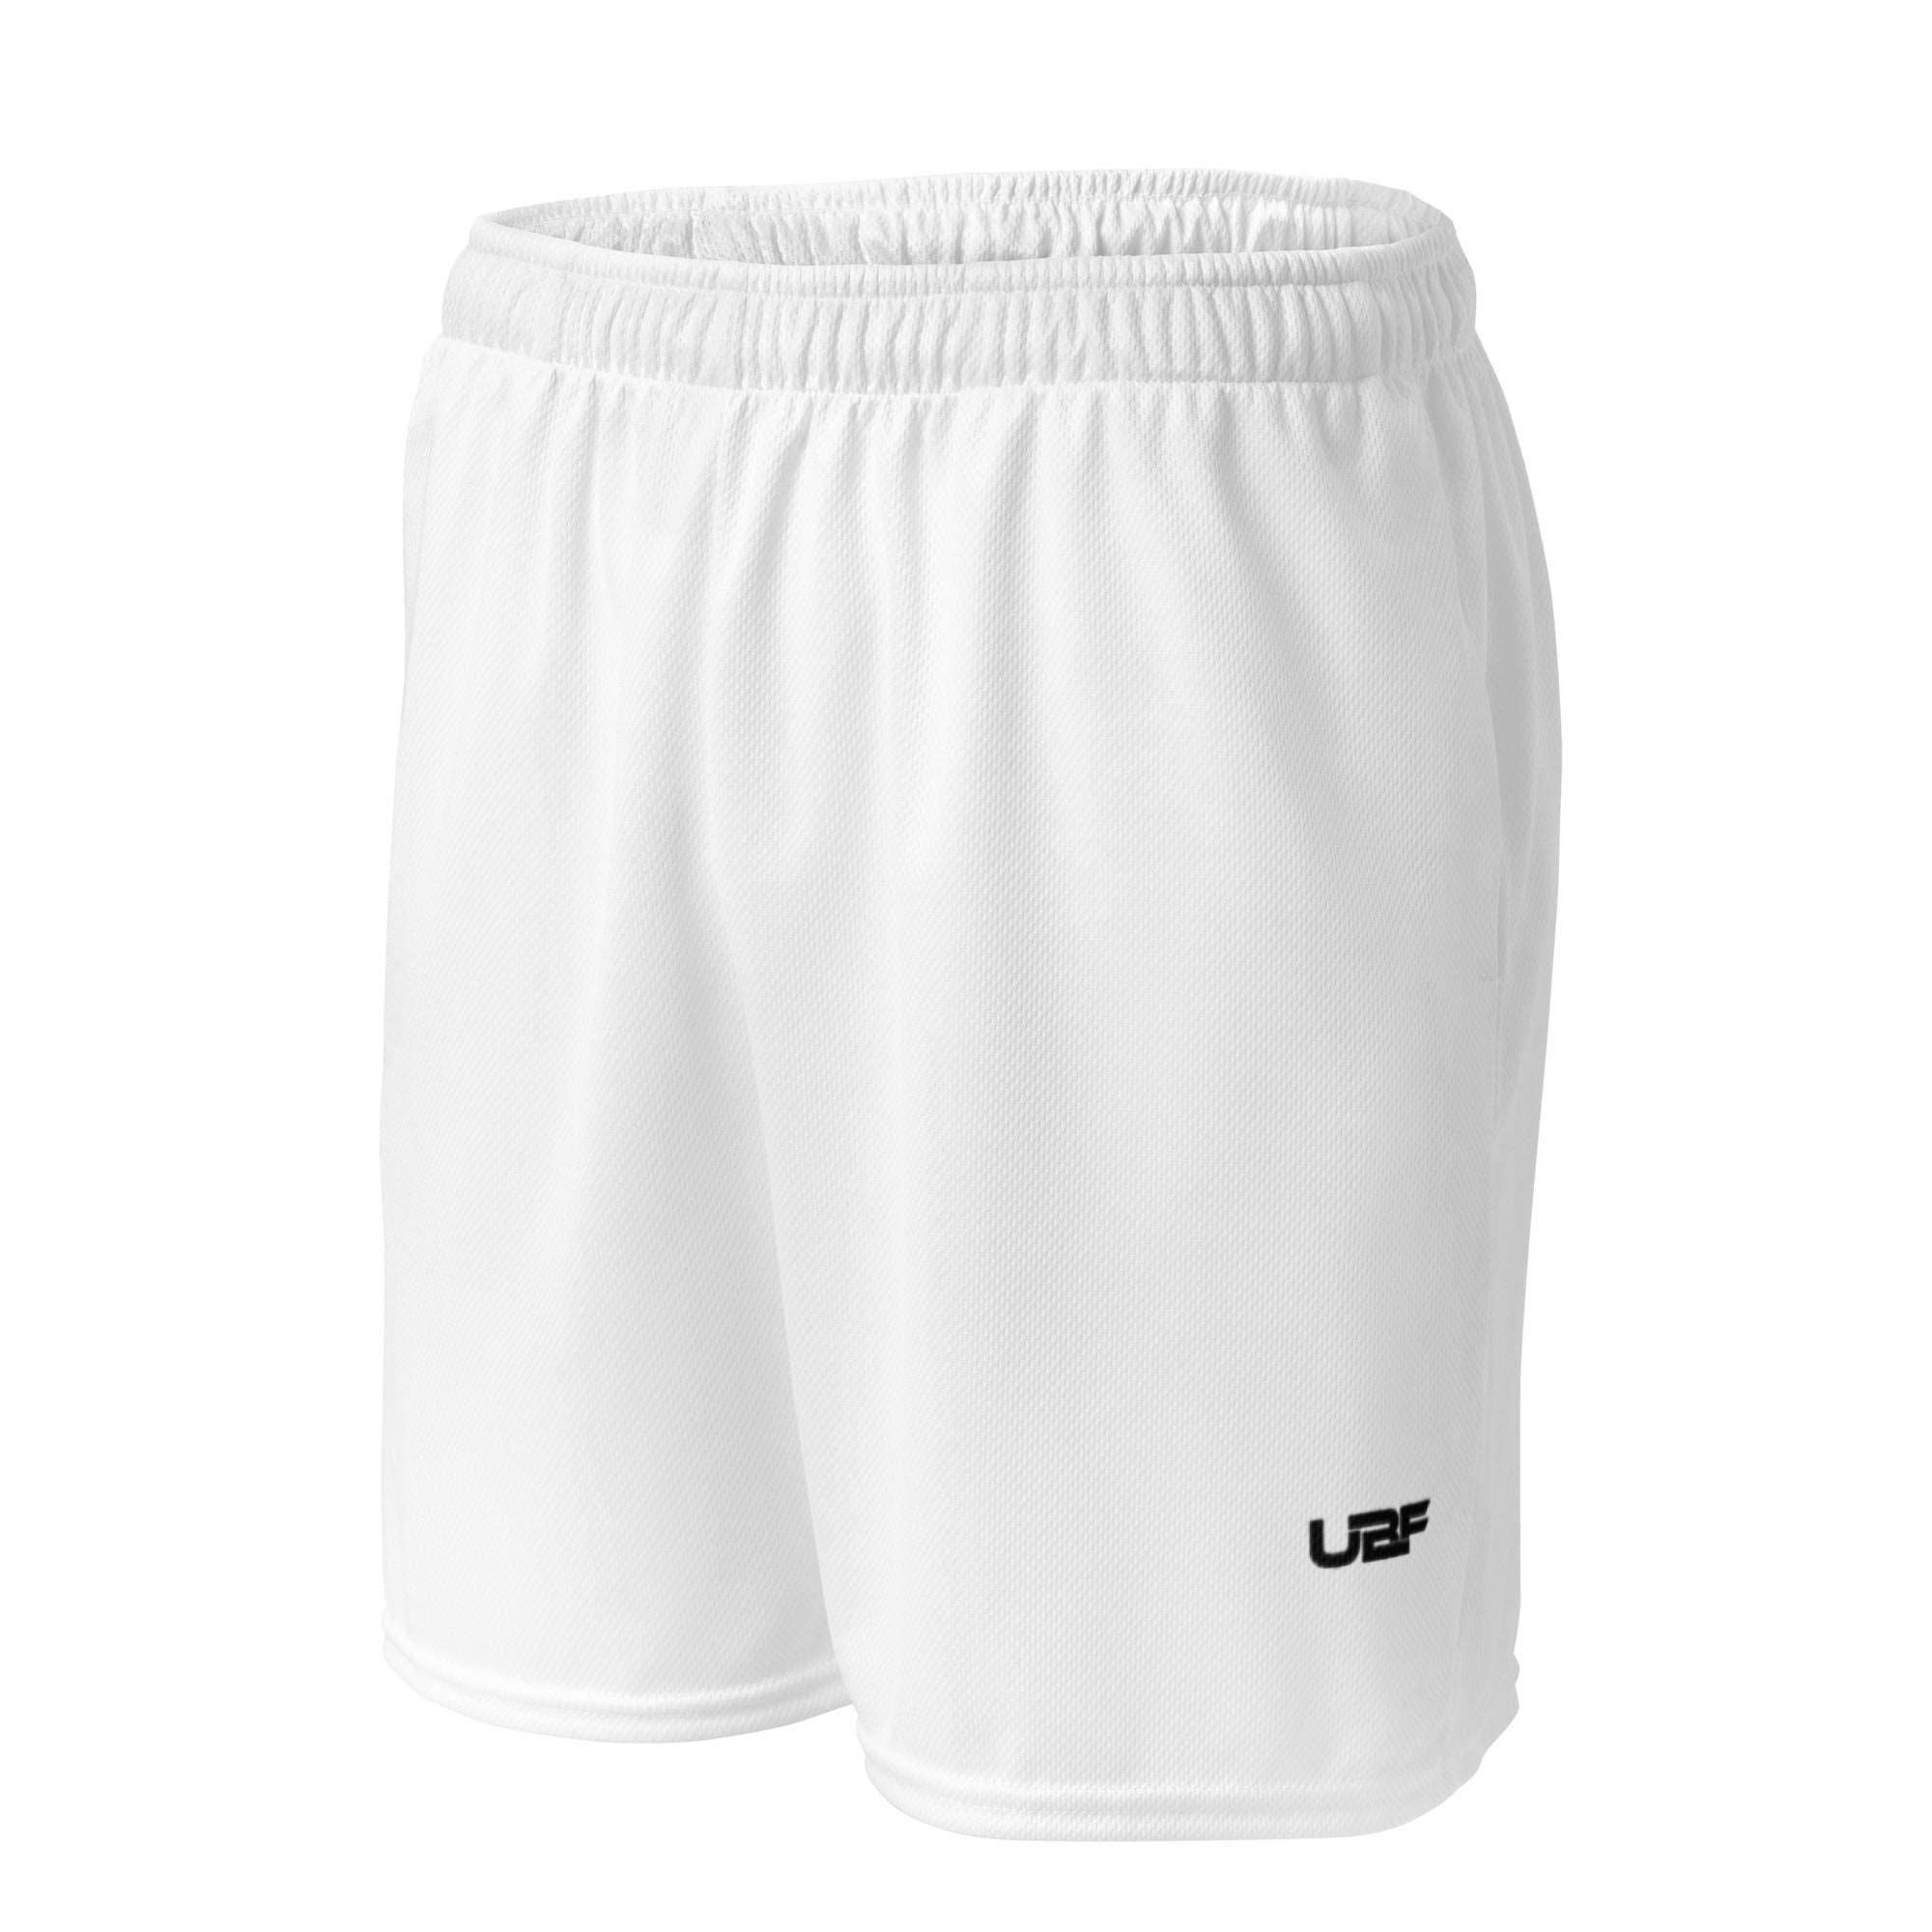 Black UBF mesh shorts